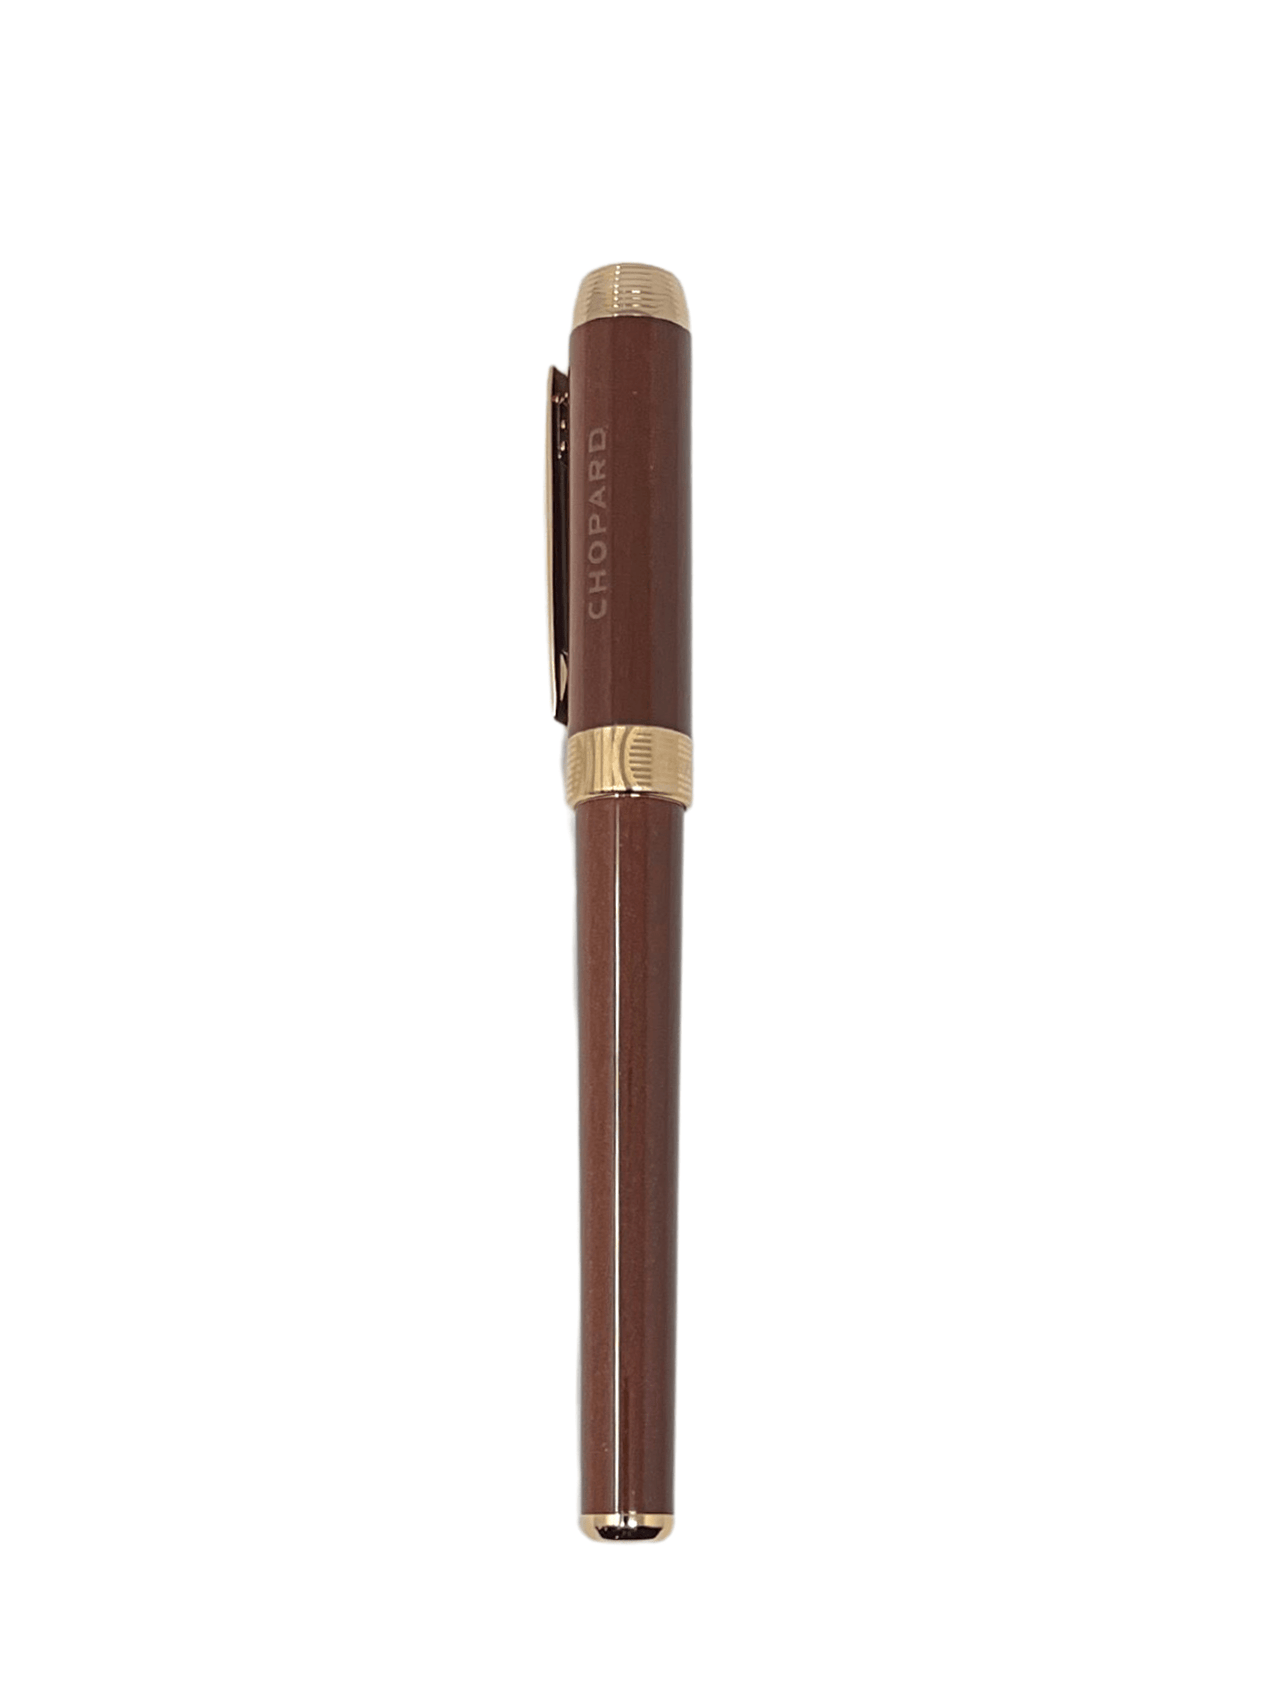 Pens Chopard Classic Superfast Brown MOP Acrylic Resin Rollerball Pen  95013-0406 Wrist Aficionado